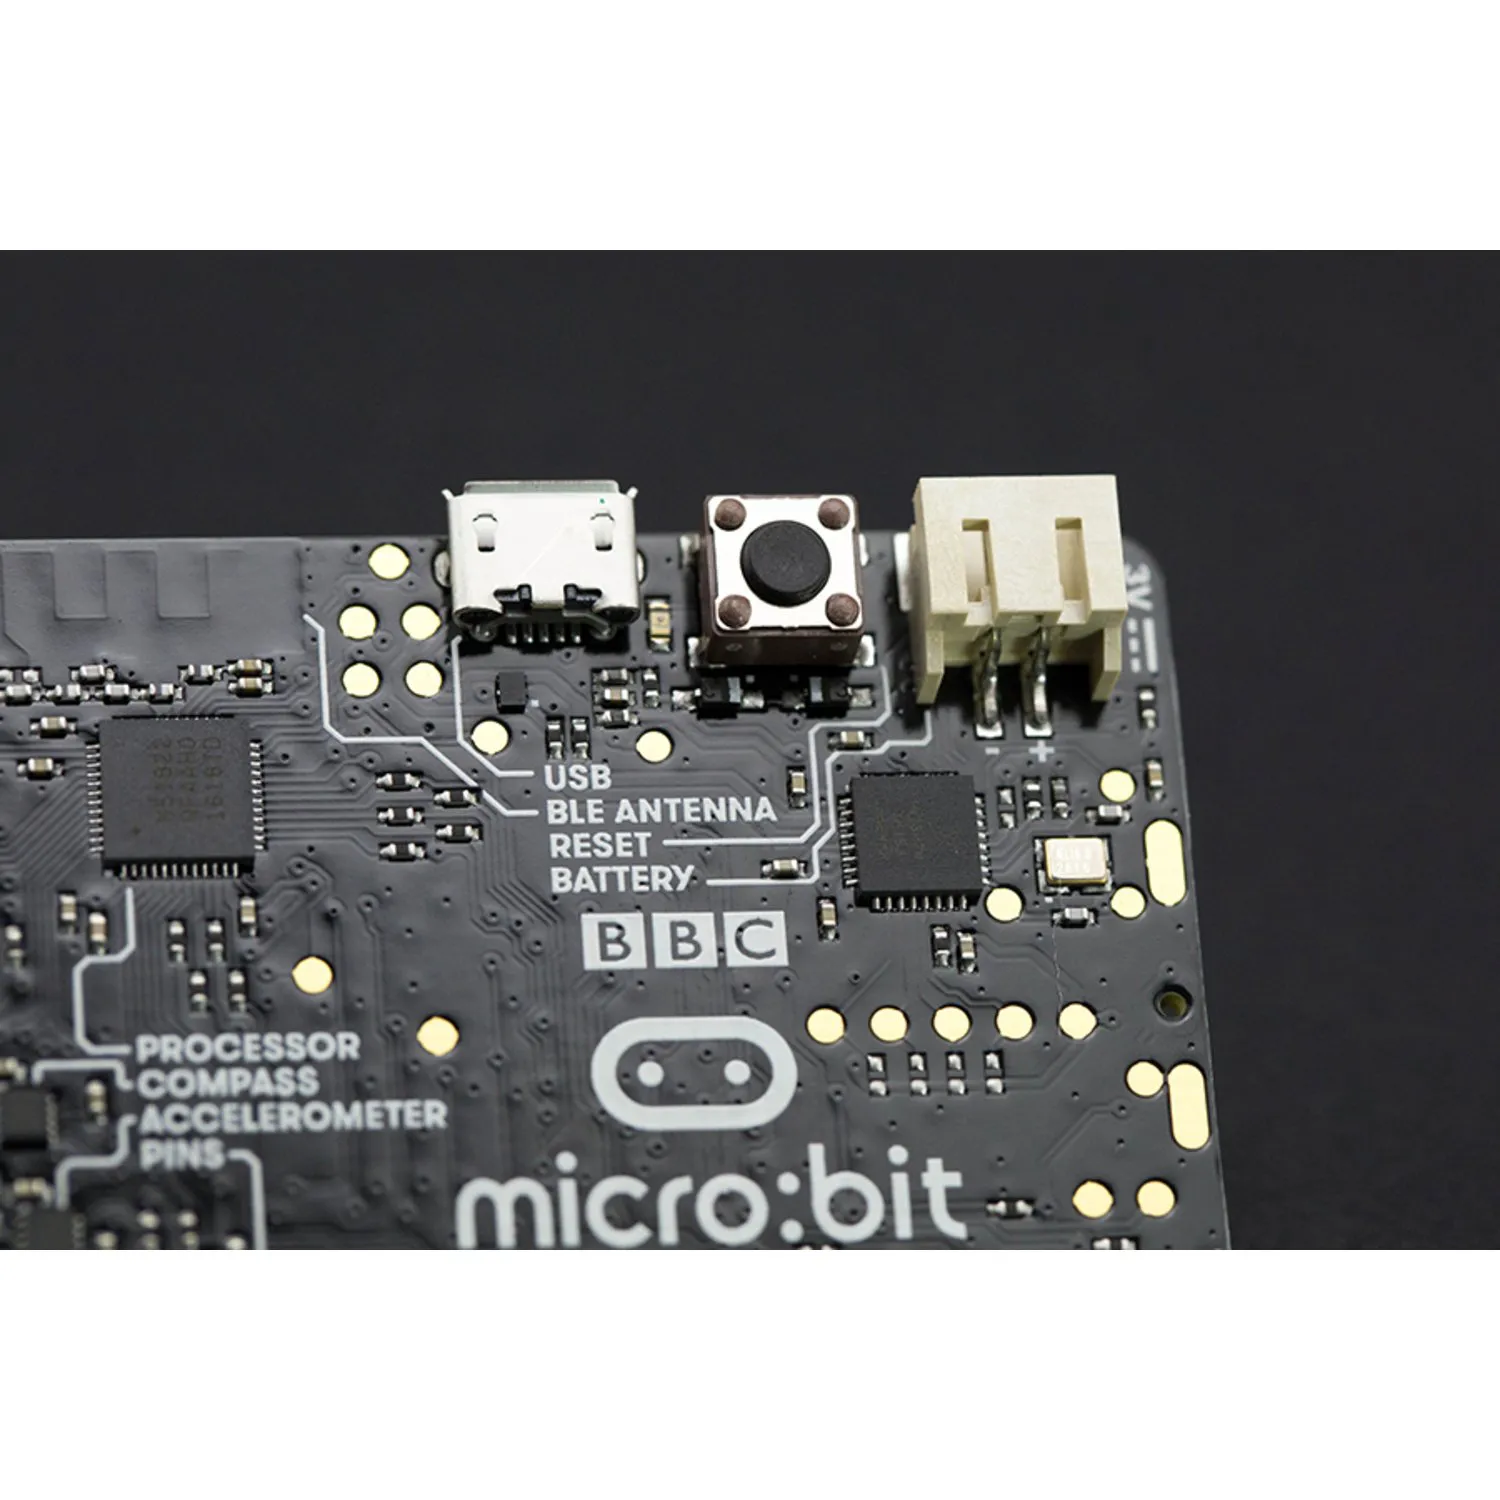 Photo of micro:bit - An Educational  Creative Tool for Kids